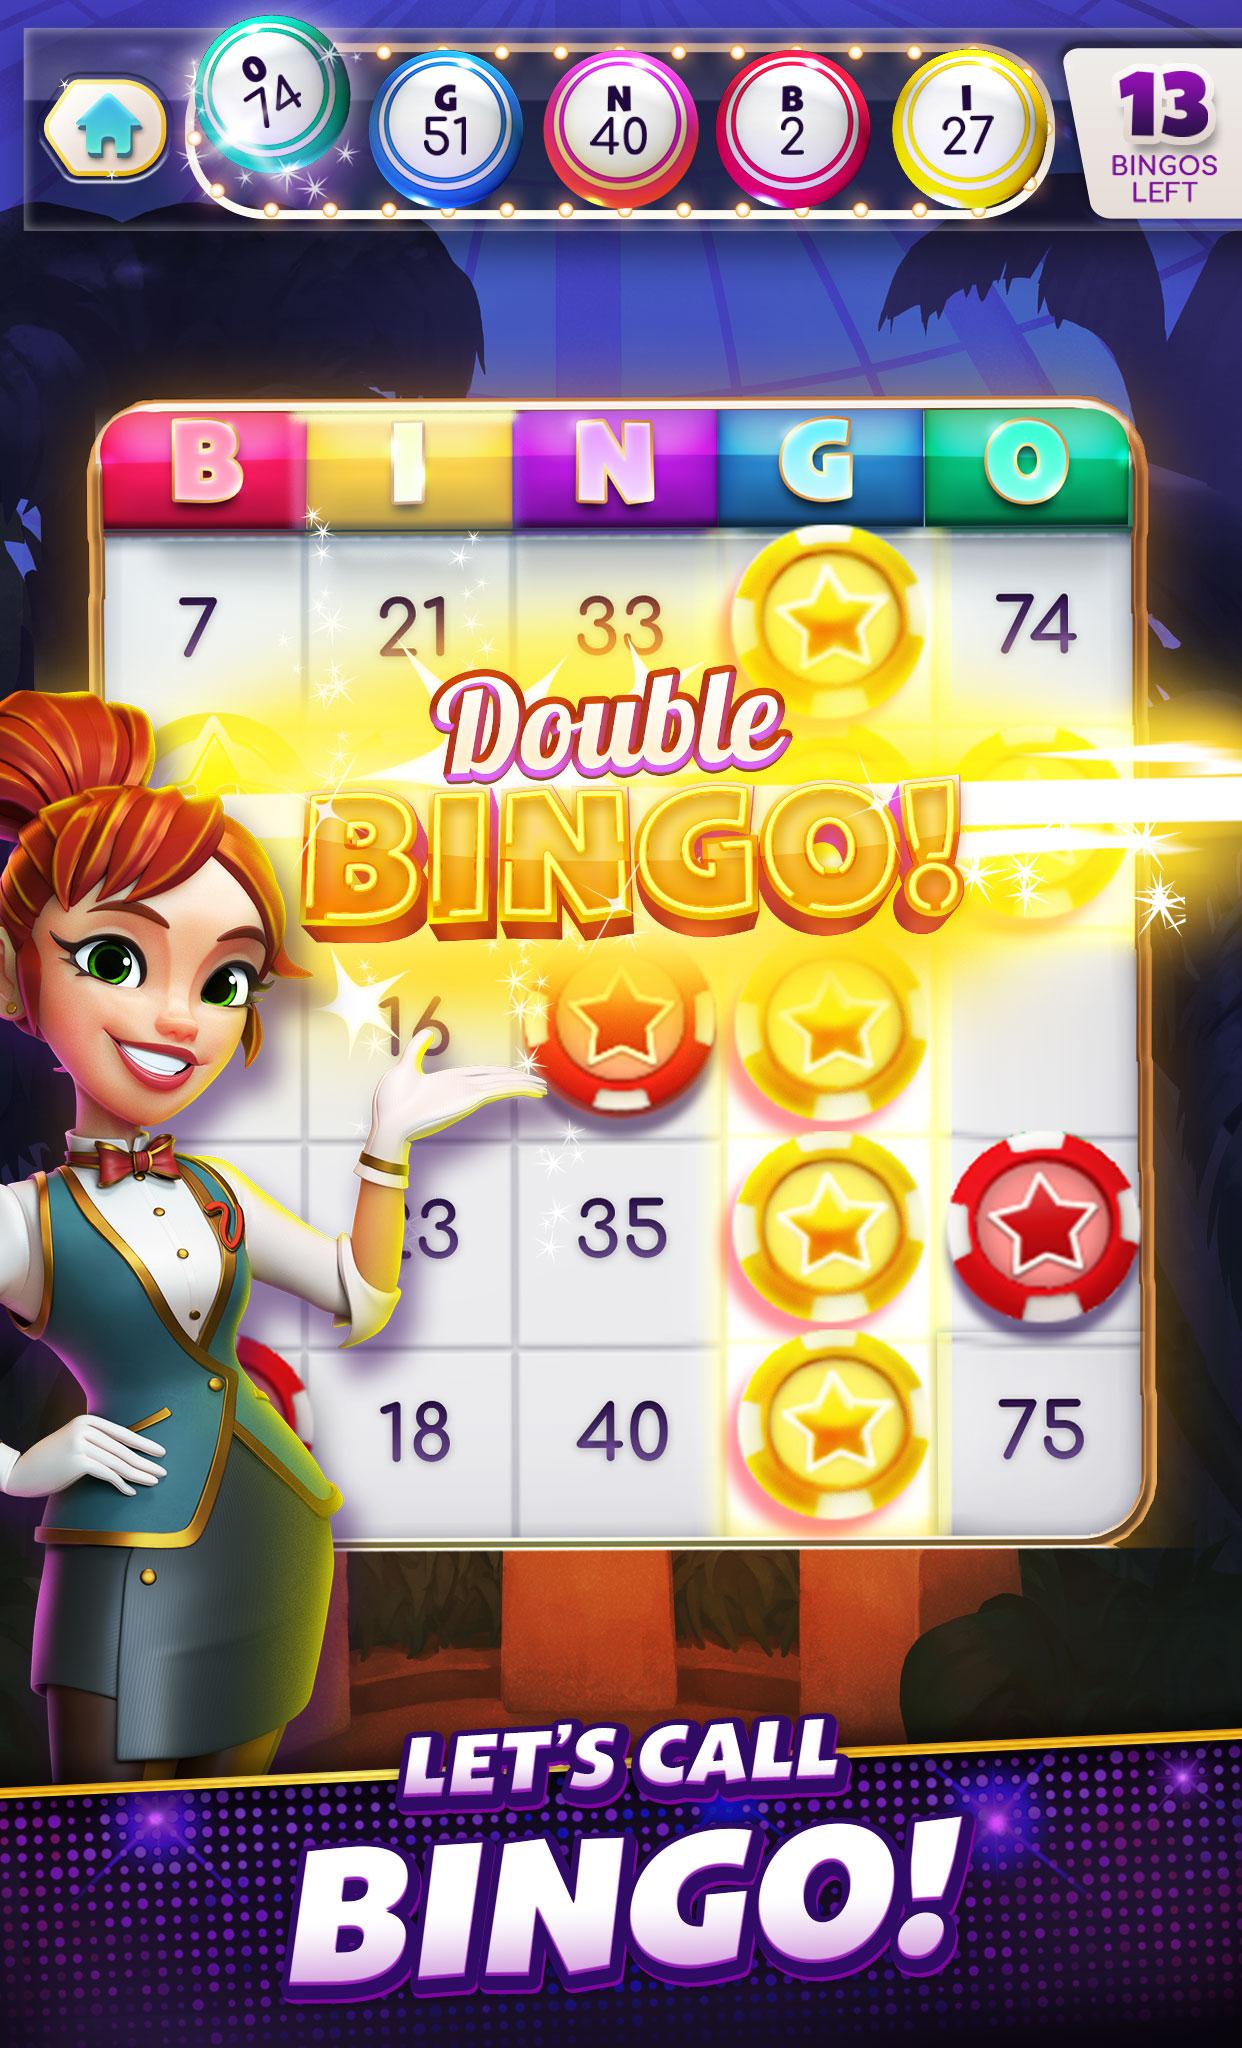 myVEGAS BINGO - Social Casino & Fun Bingo Games! 0.1.1499 Screenshot 1